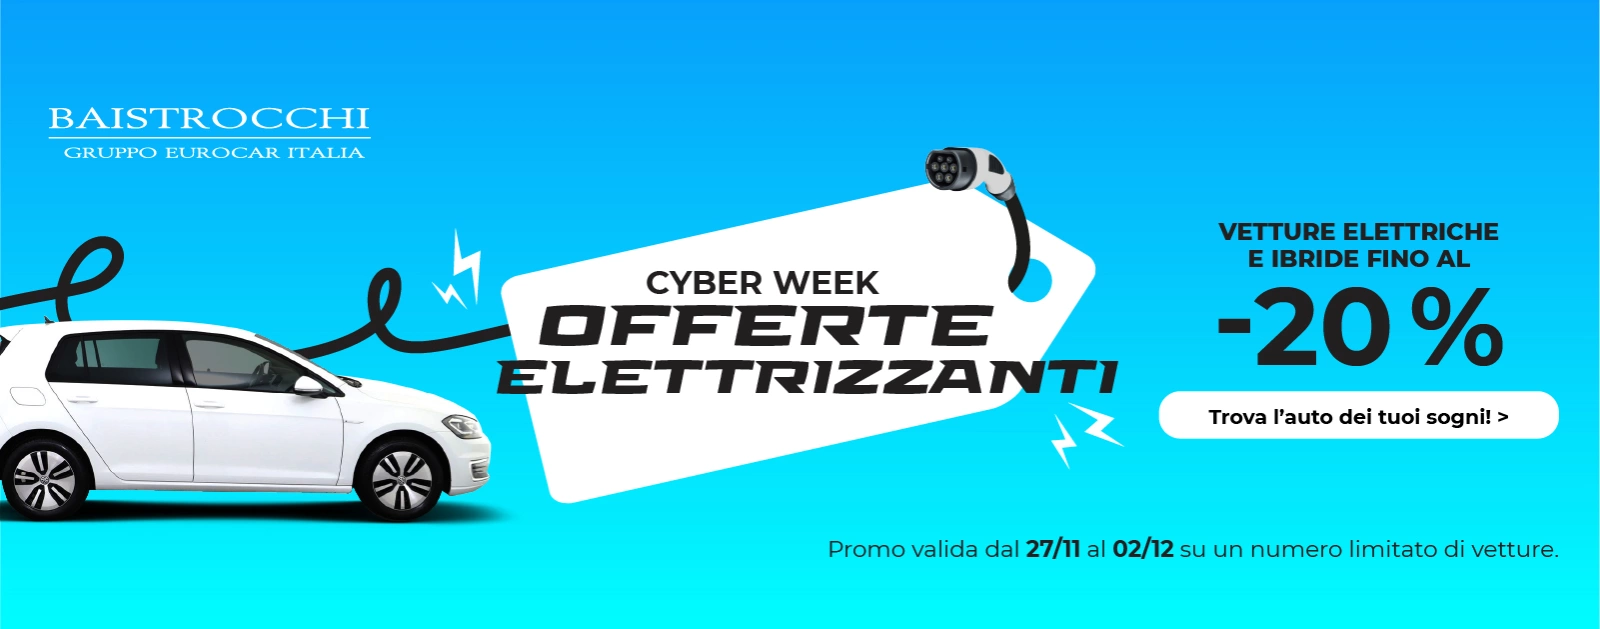 cyberweek_baistrocchi